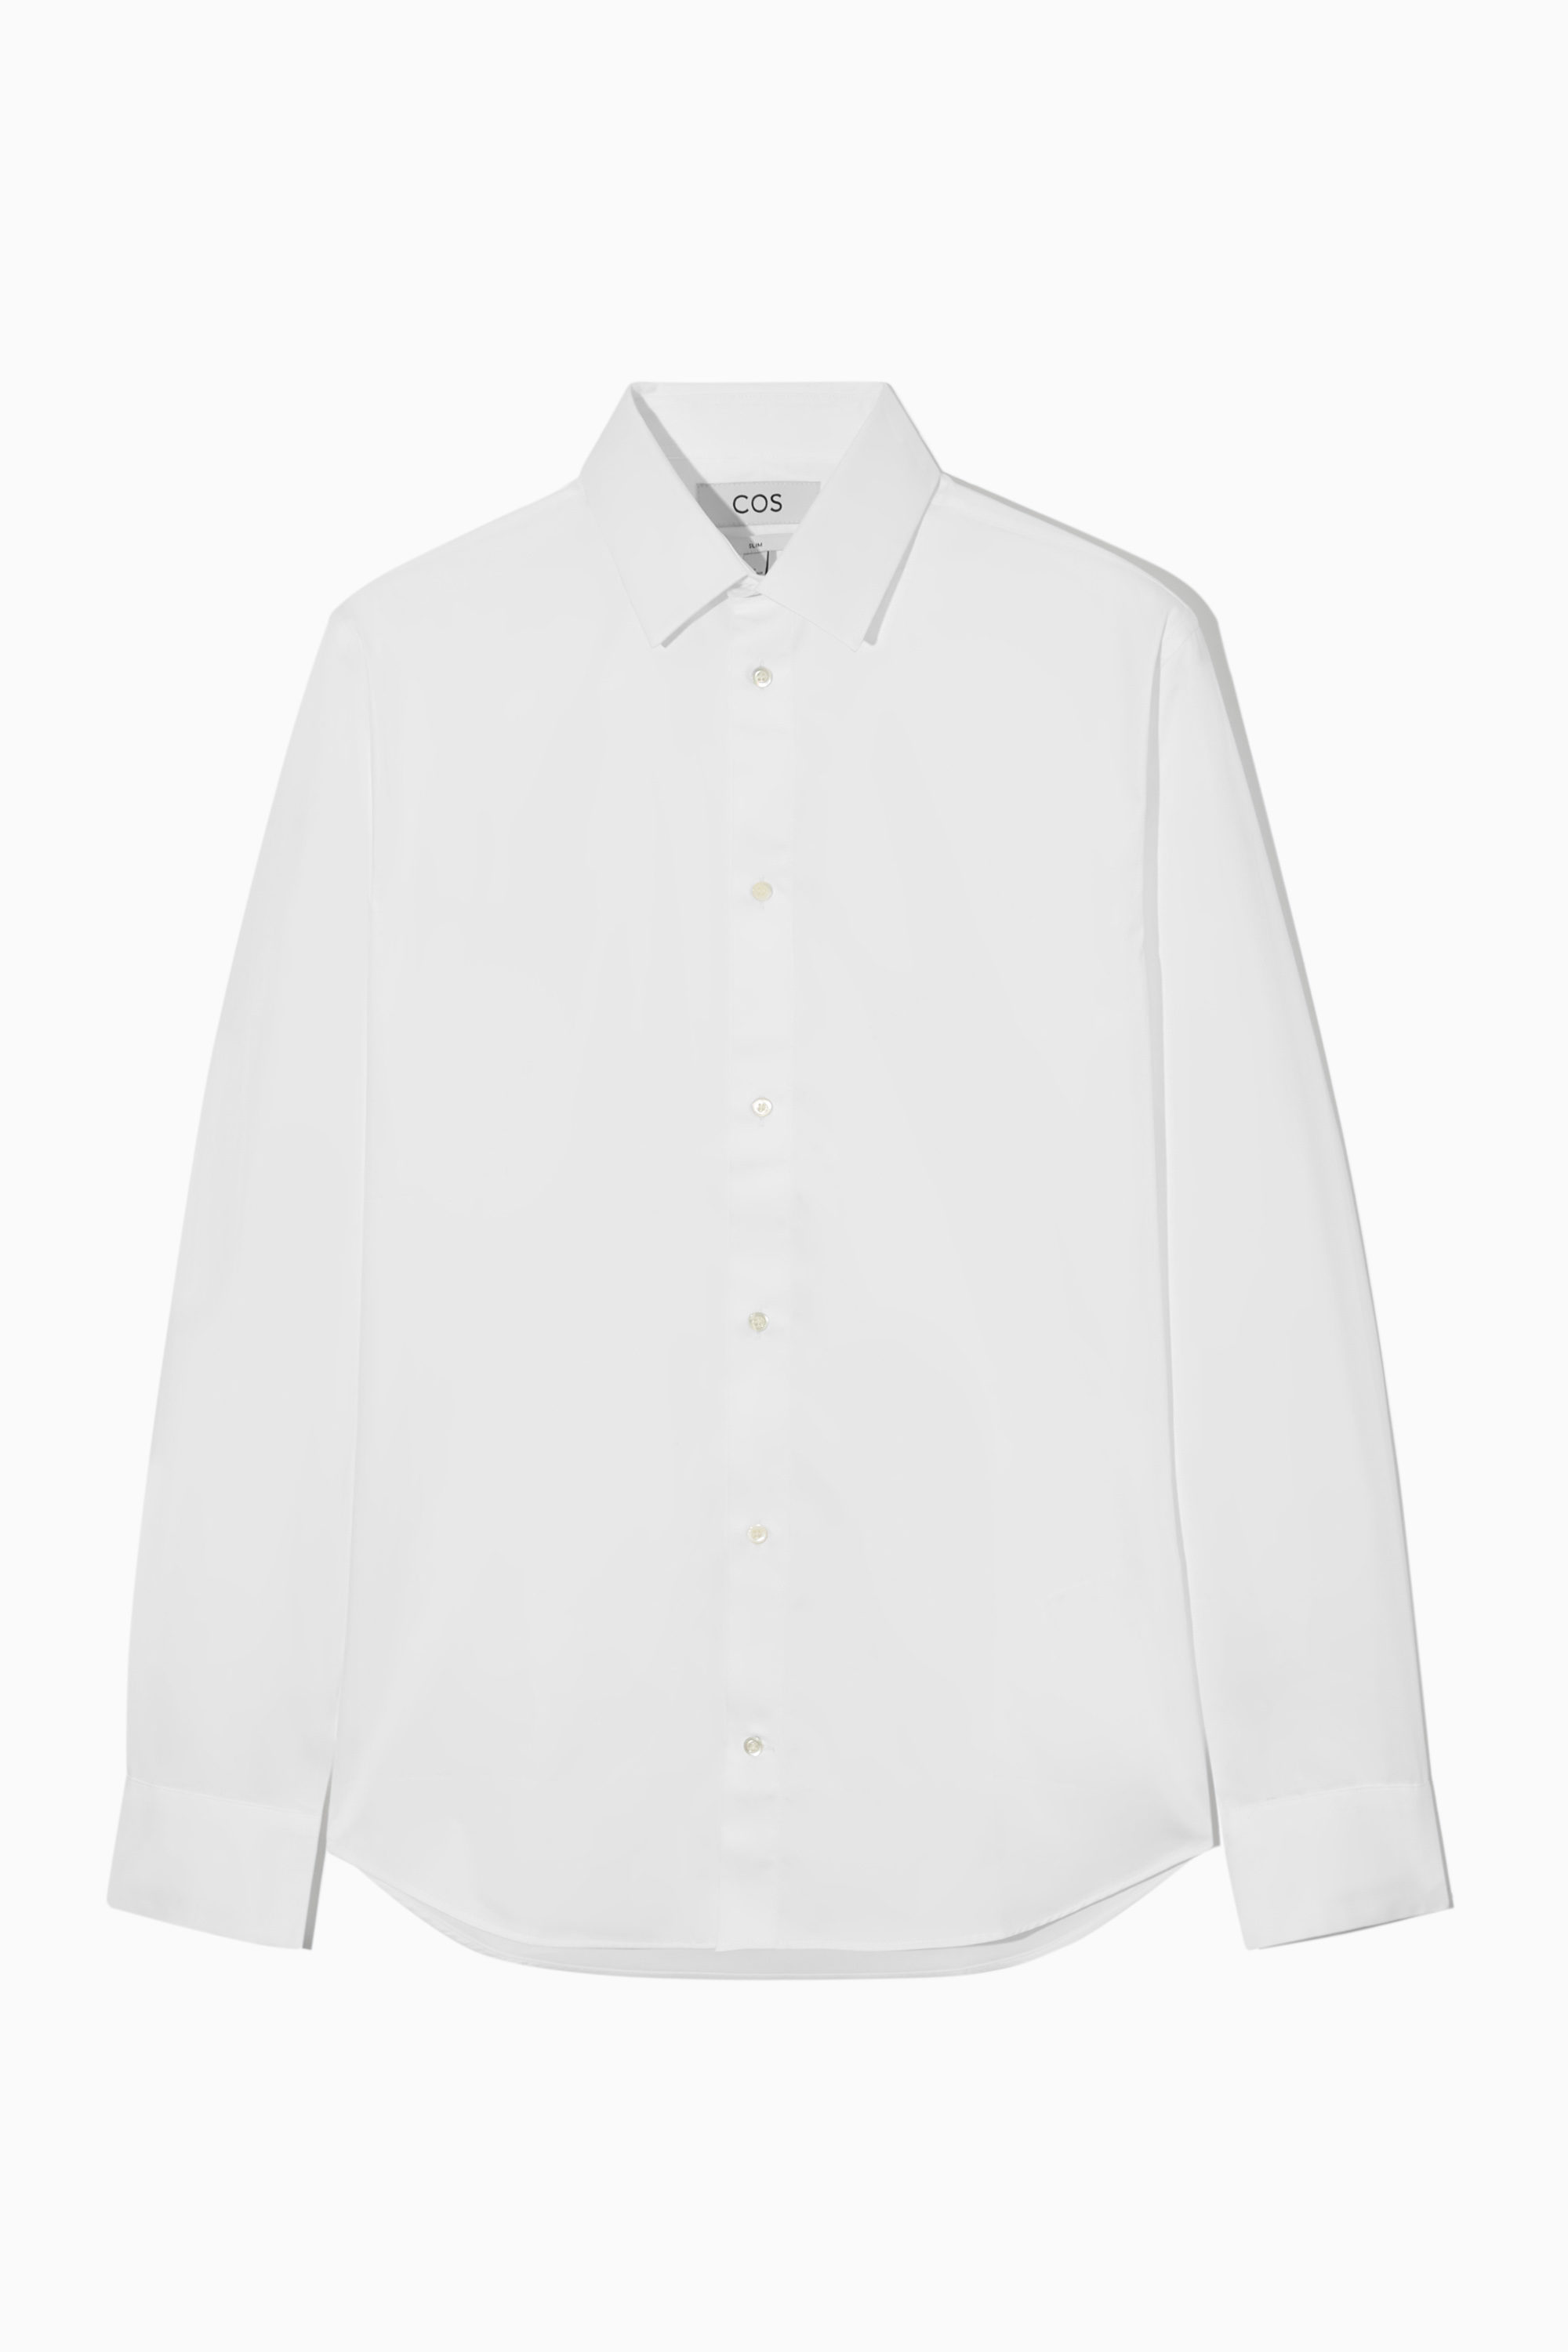 Gucci White Button-Down Collared Men's Slim Size 39 Shirt